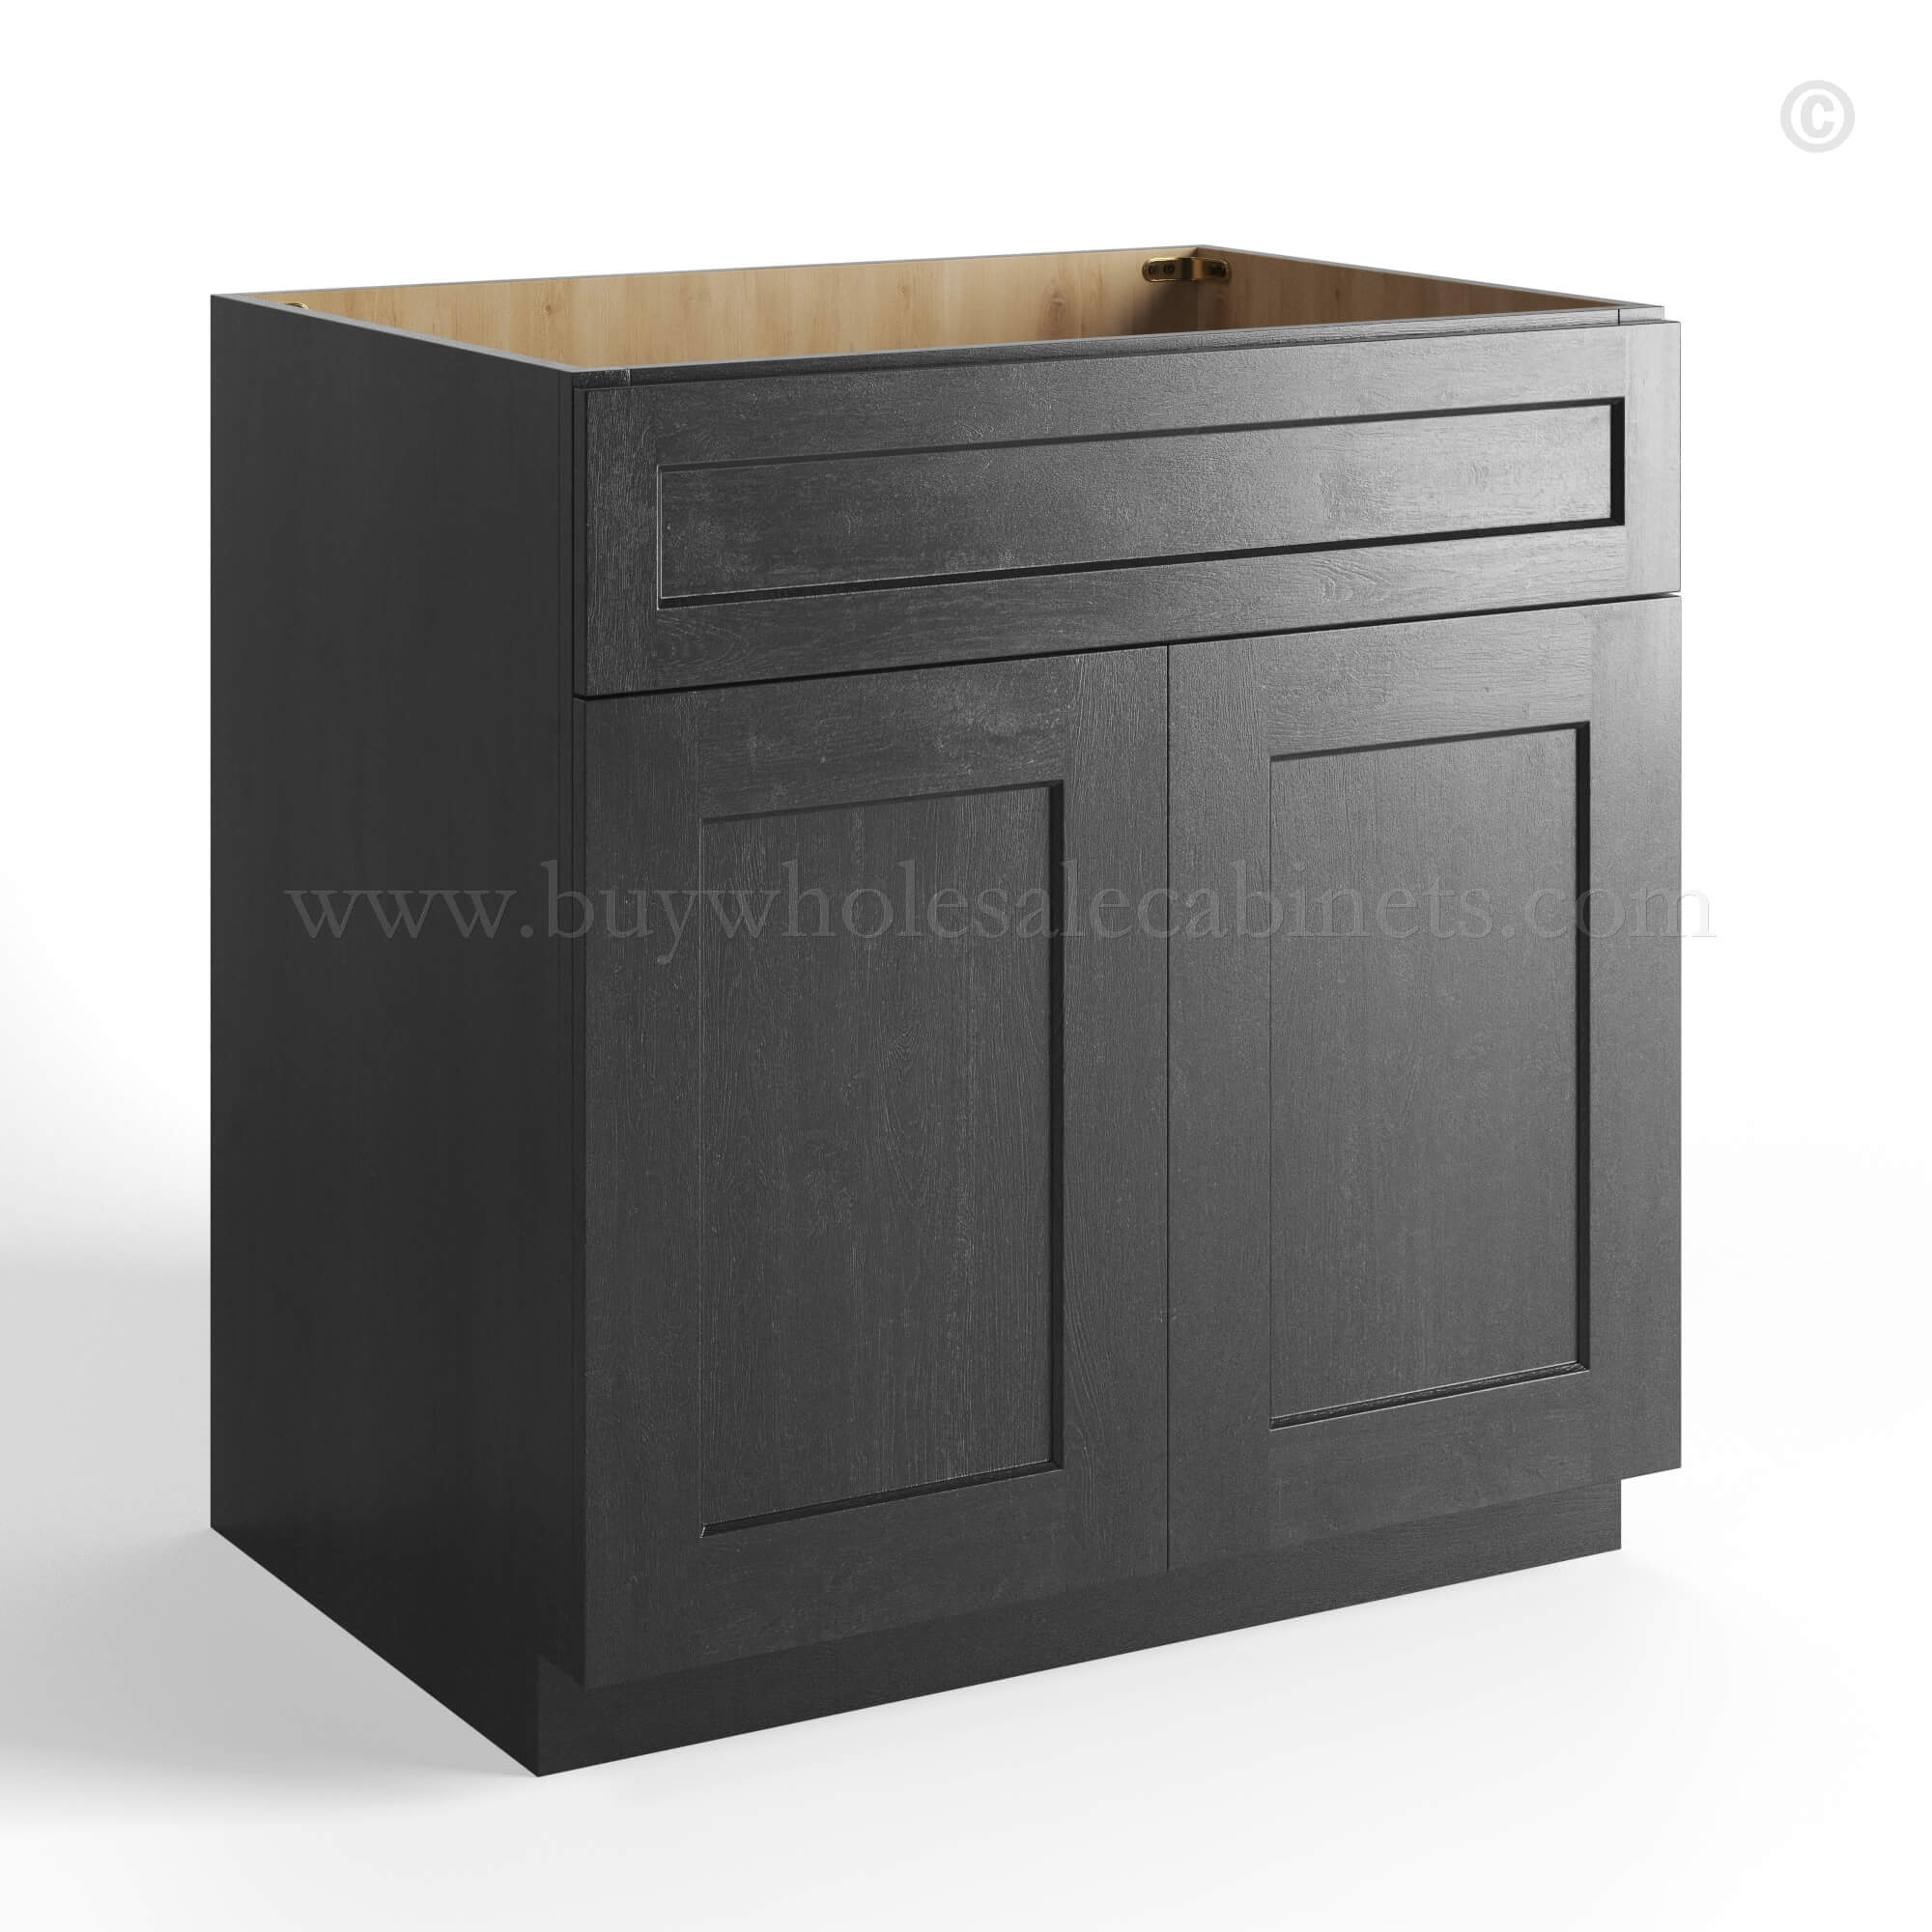 Charcoal Black Shaker Sink Base Double Door & 1 False Drawer, rta cabinets, wholesale cabinets